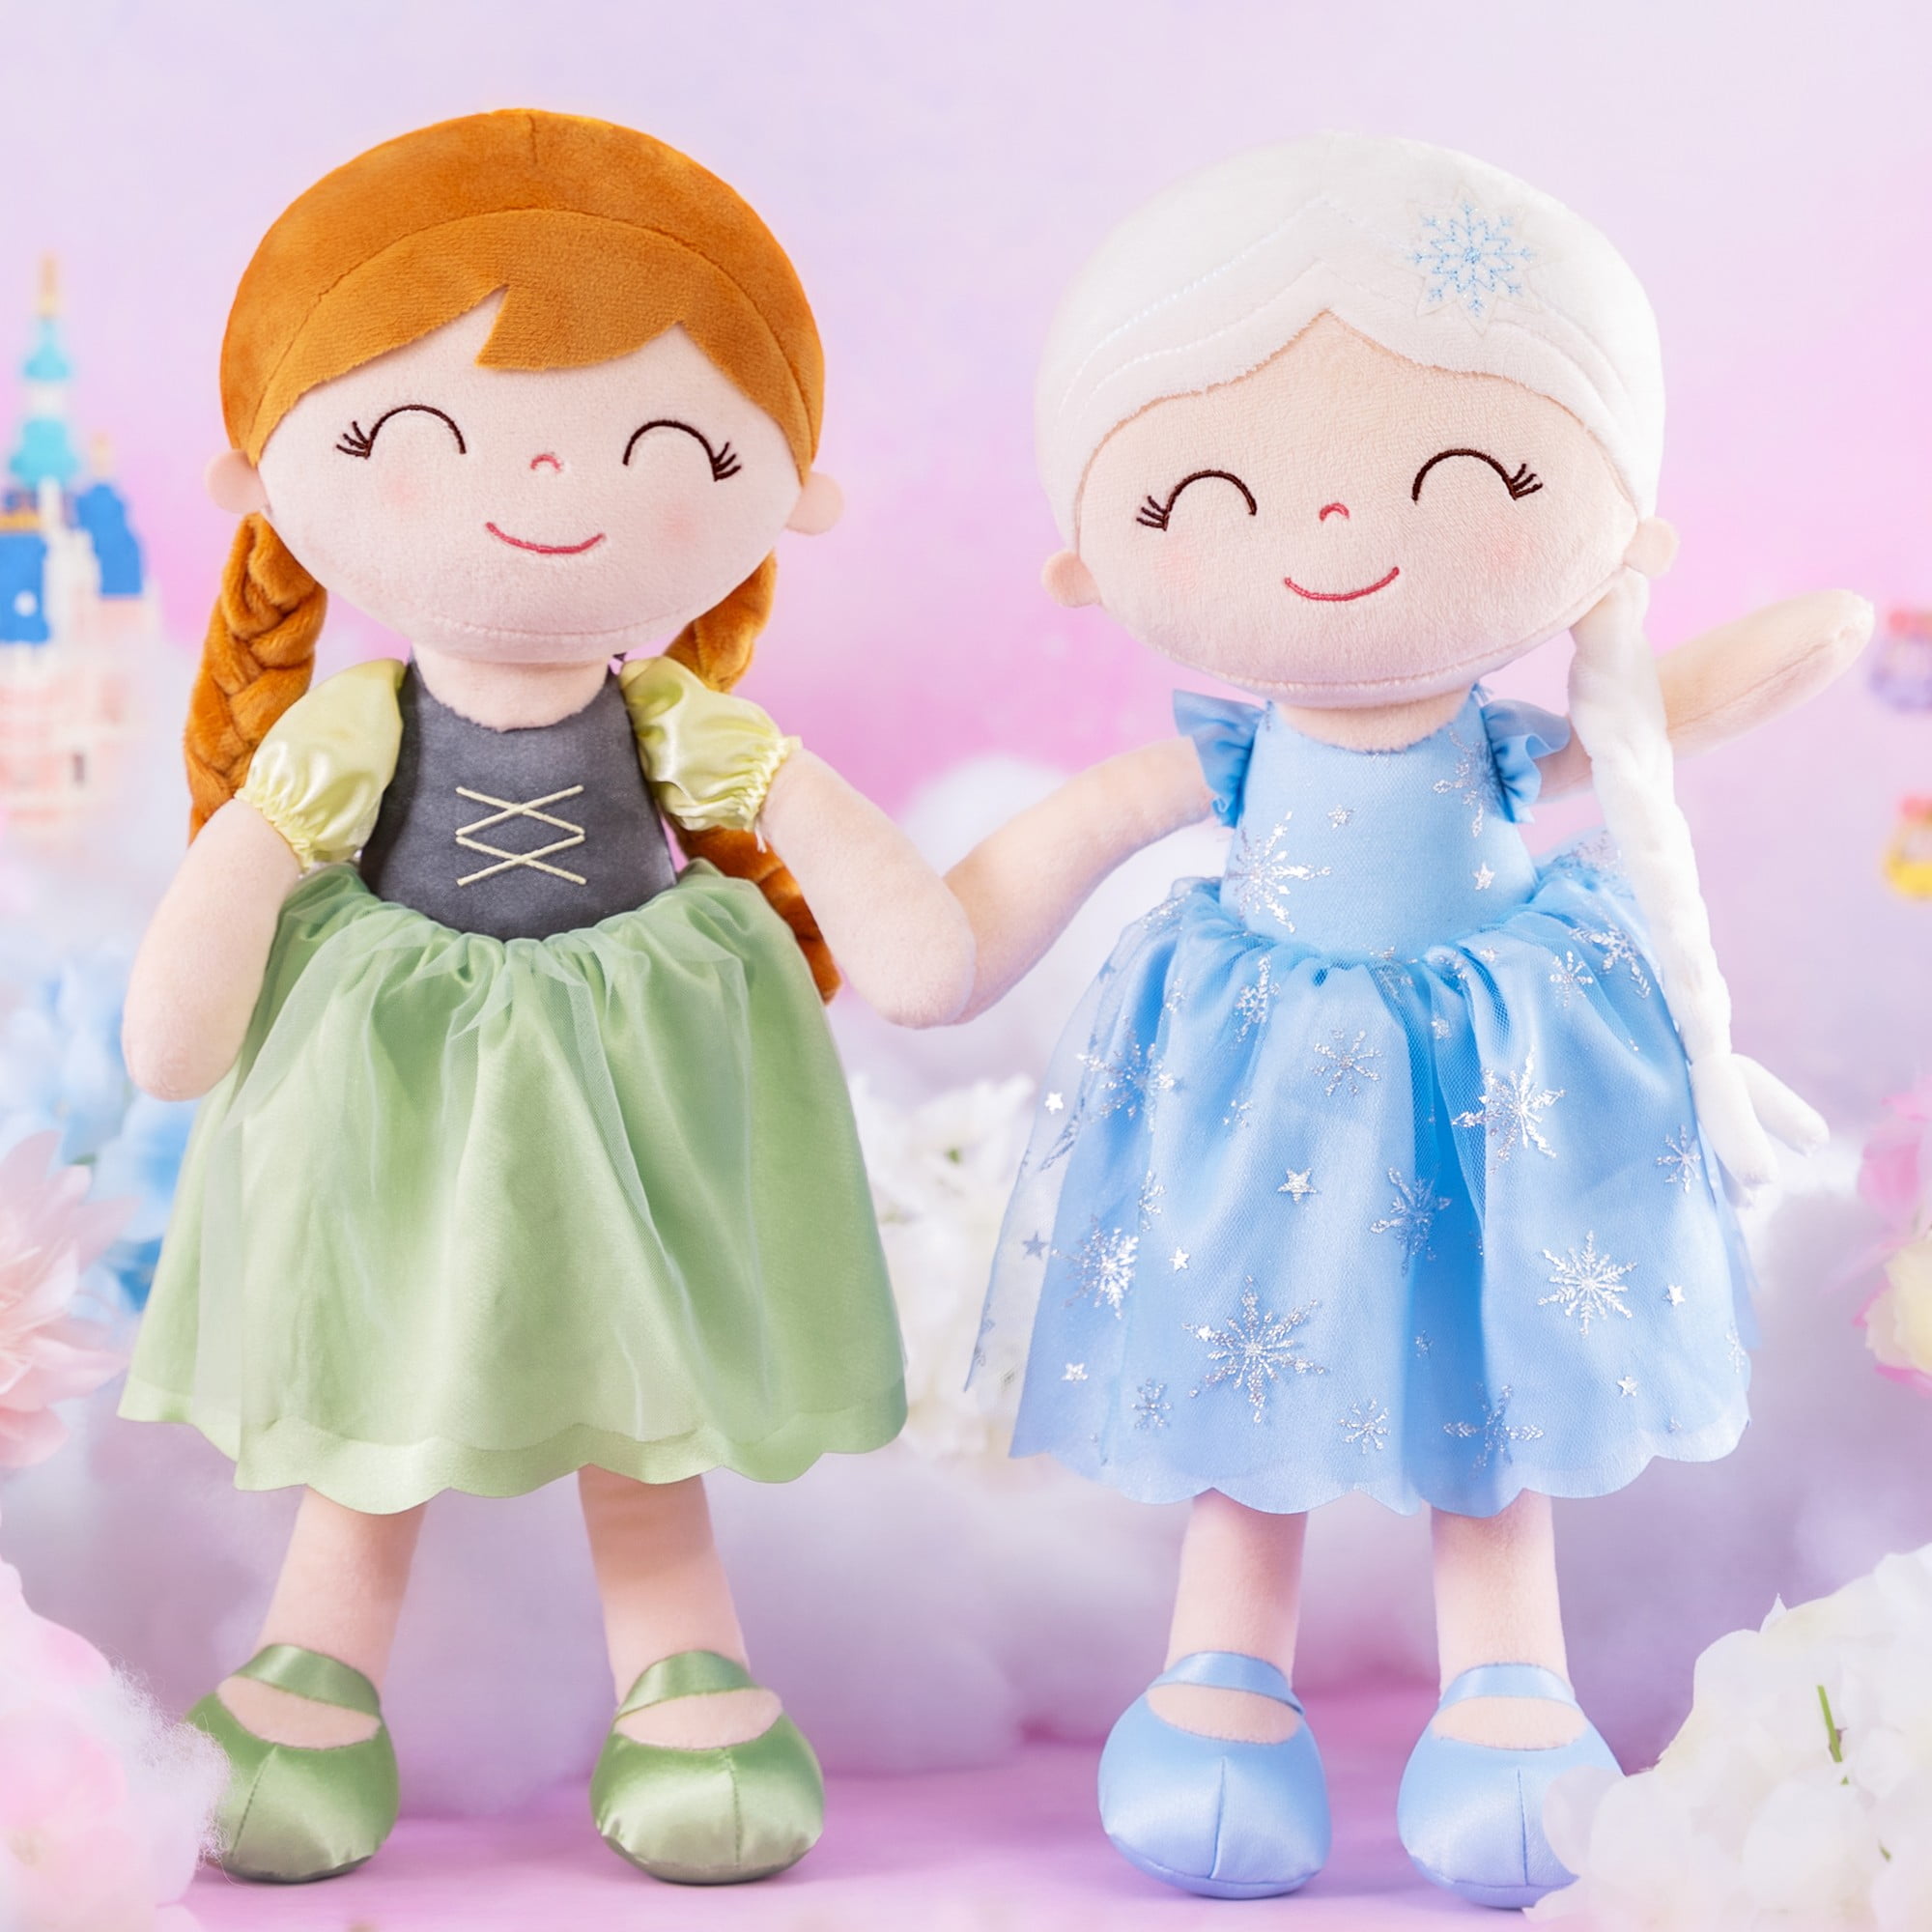  Gloveleya Dolls Princess Girls Toy First Baby Girl Gifts Soft  Plush Manor Princess Doll Cindy Blue 16 : Toys & Games